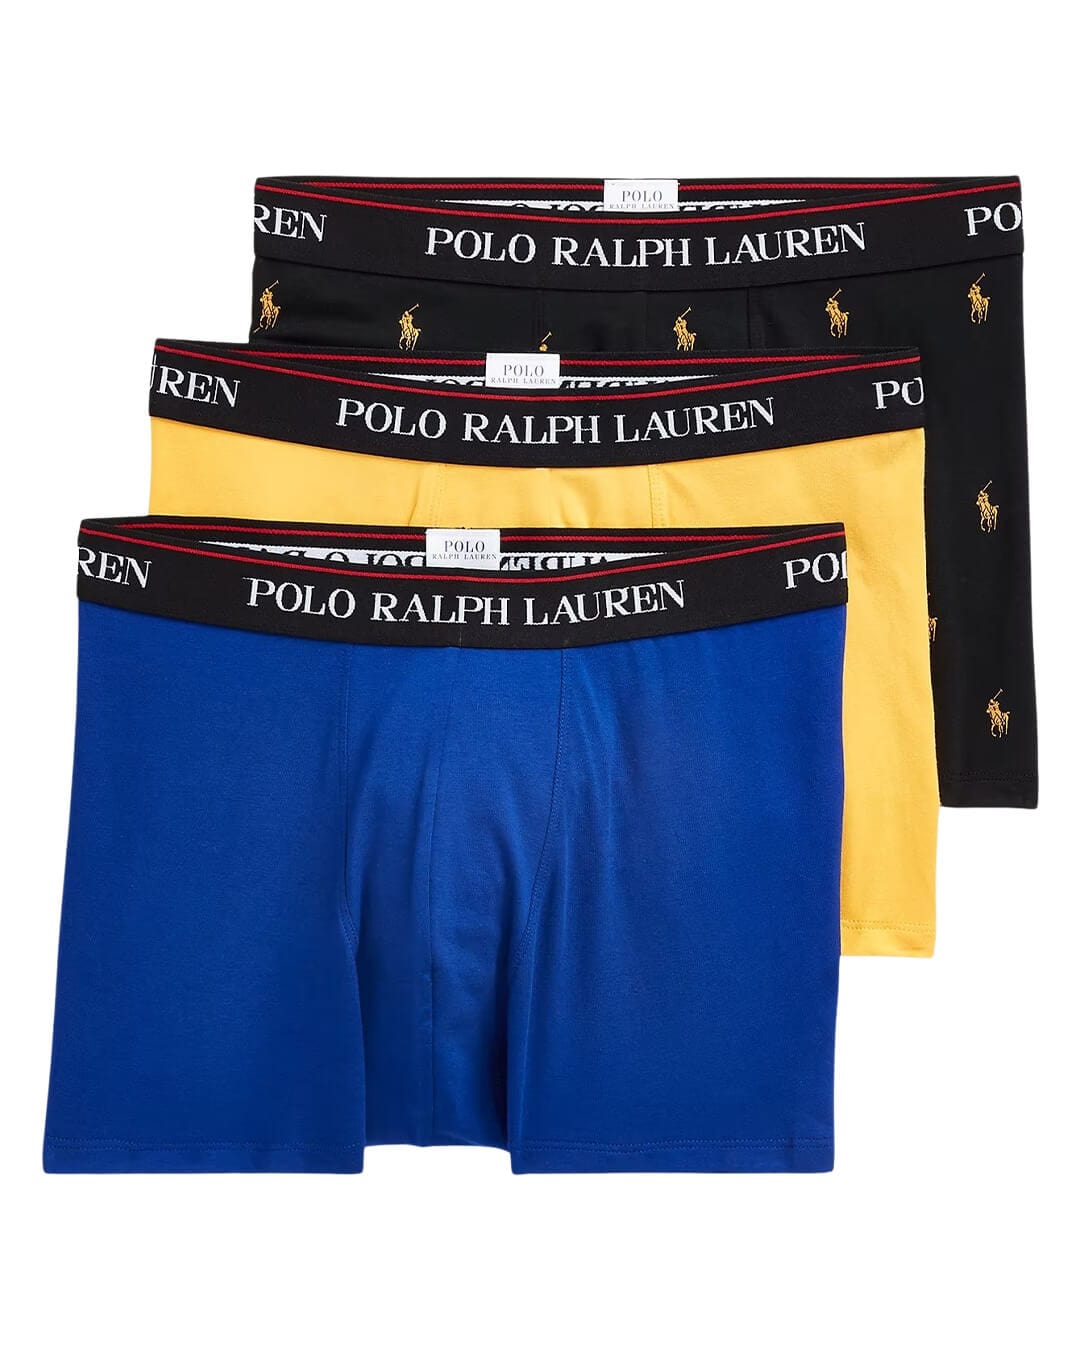 Polo Ralph Lauren Underwear Polo Ralph Lauren Blue, Gold And Black Three-Pack Trunks